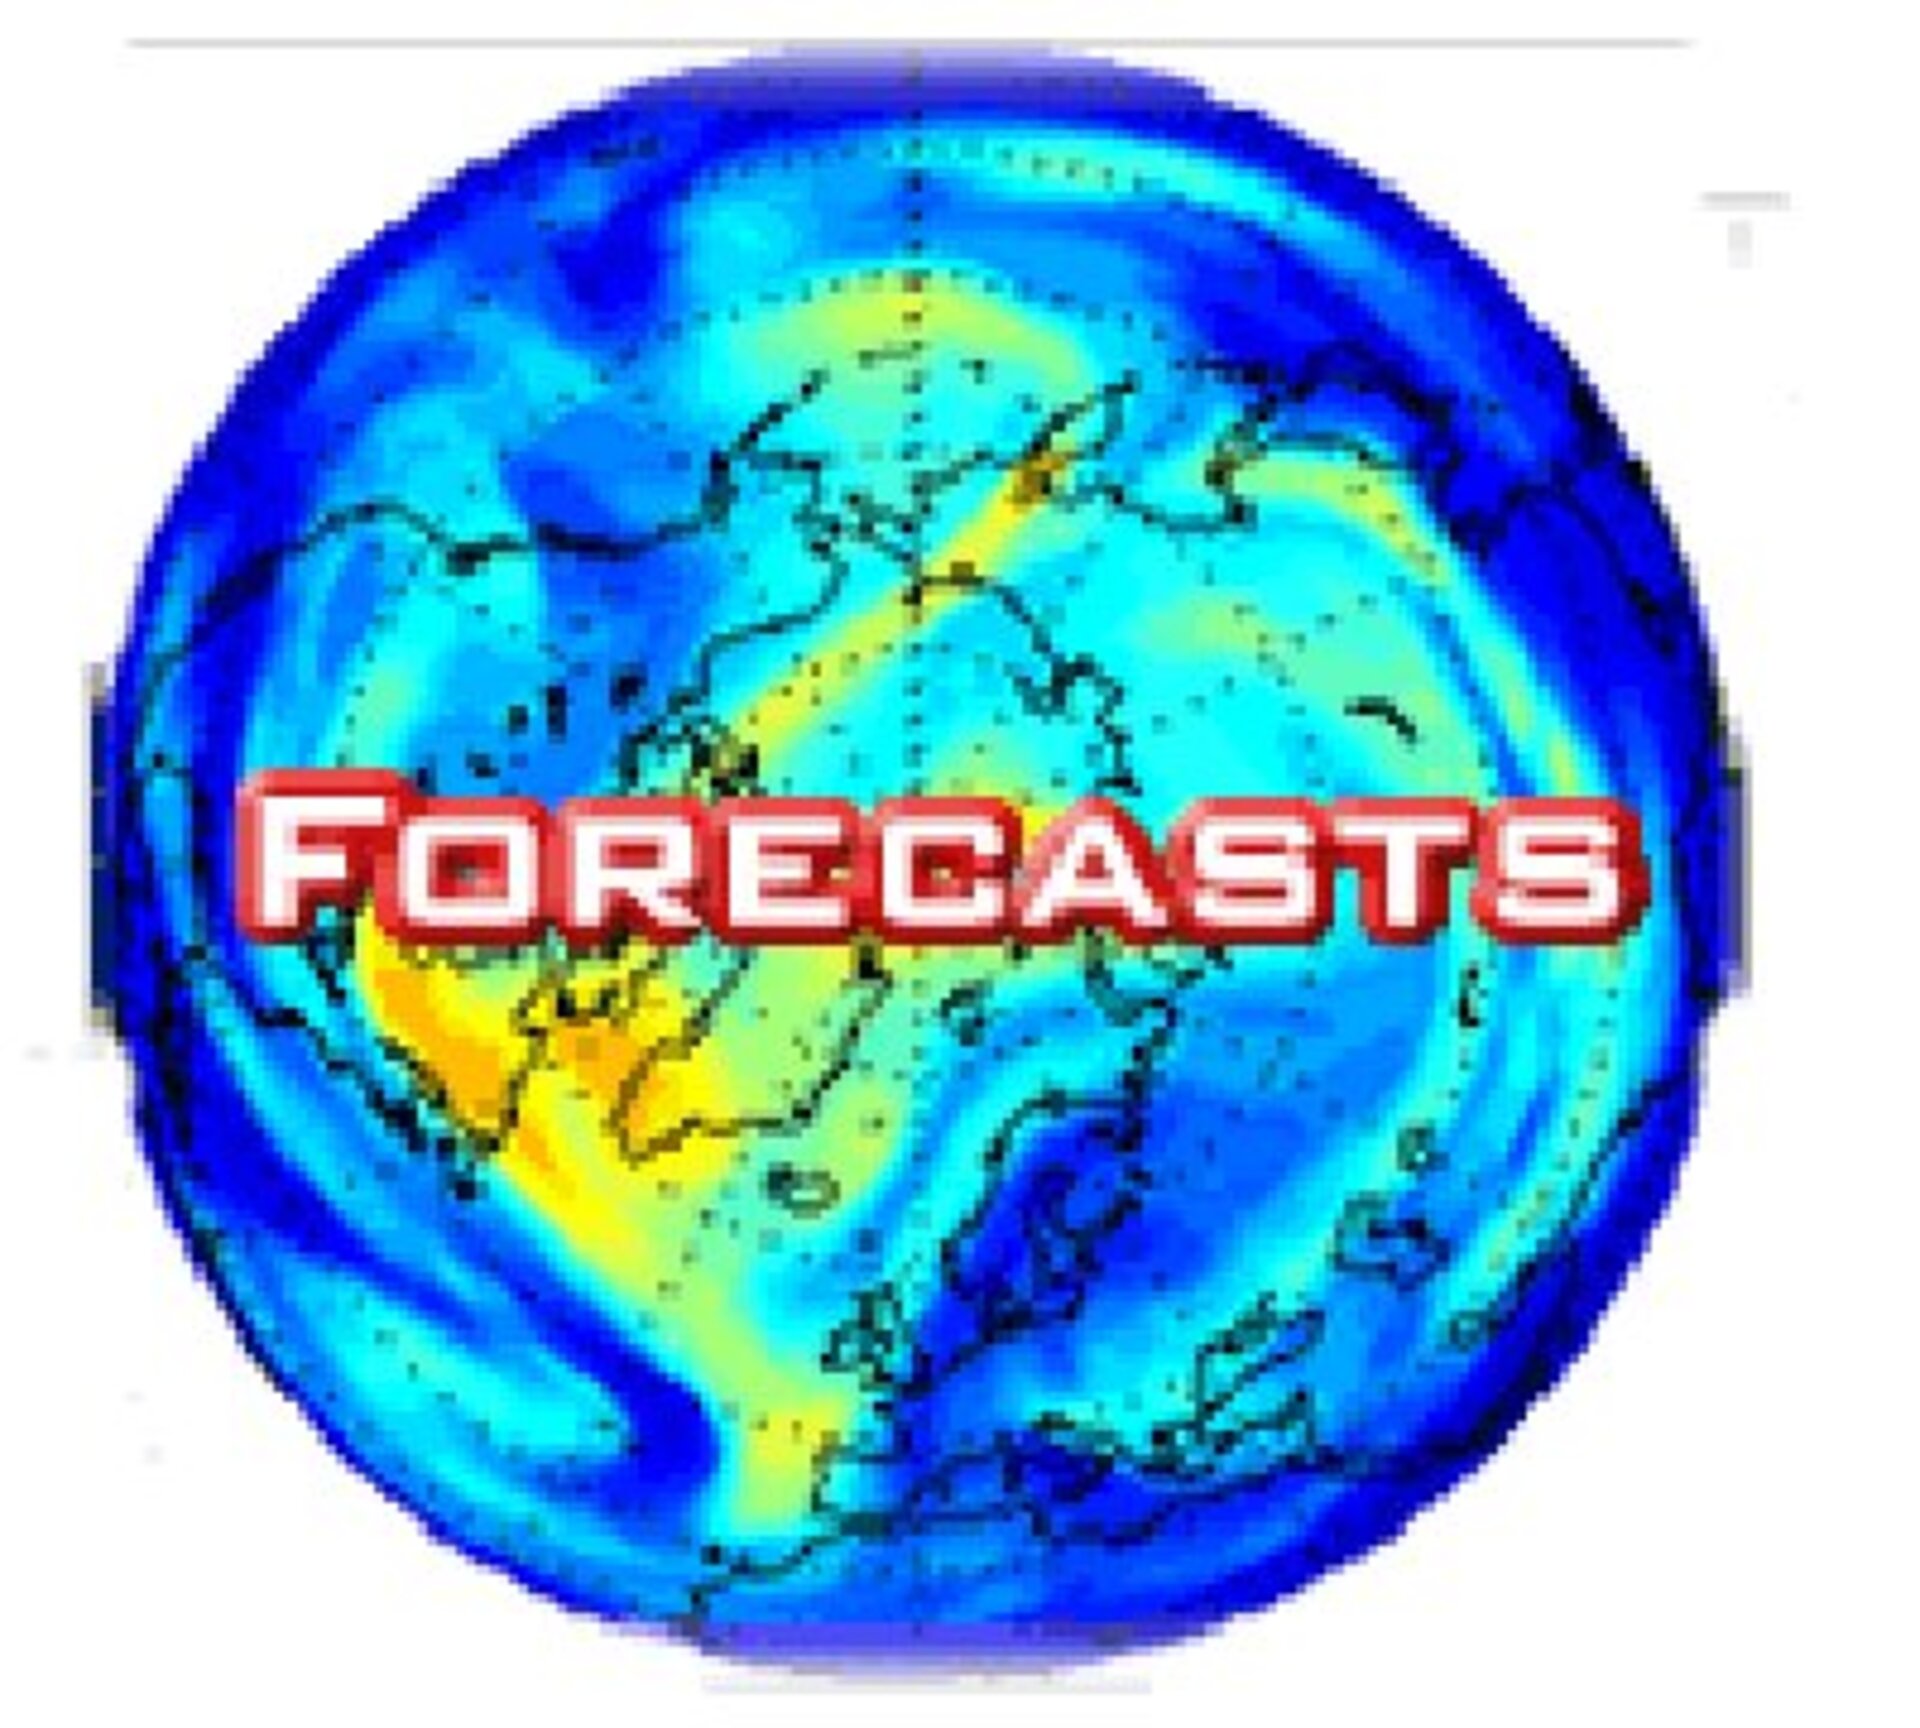 Ozone predictions with Bascoe